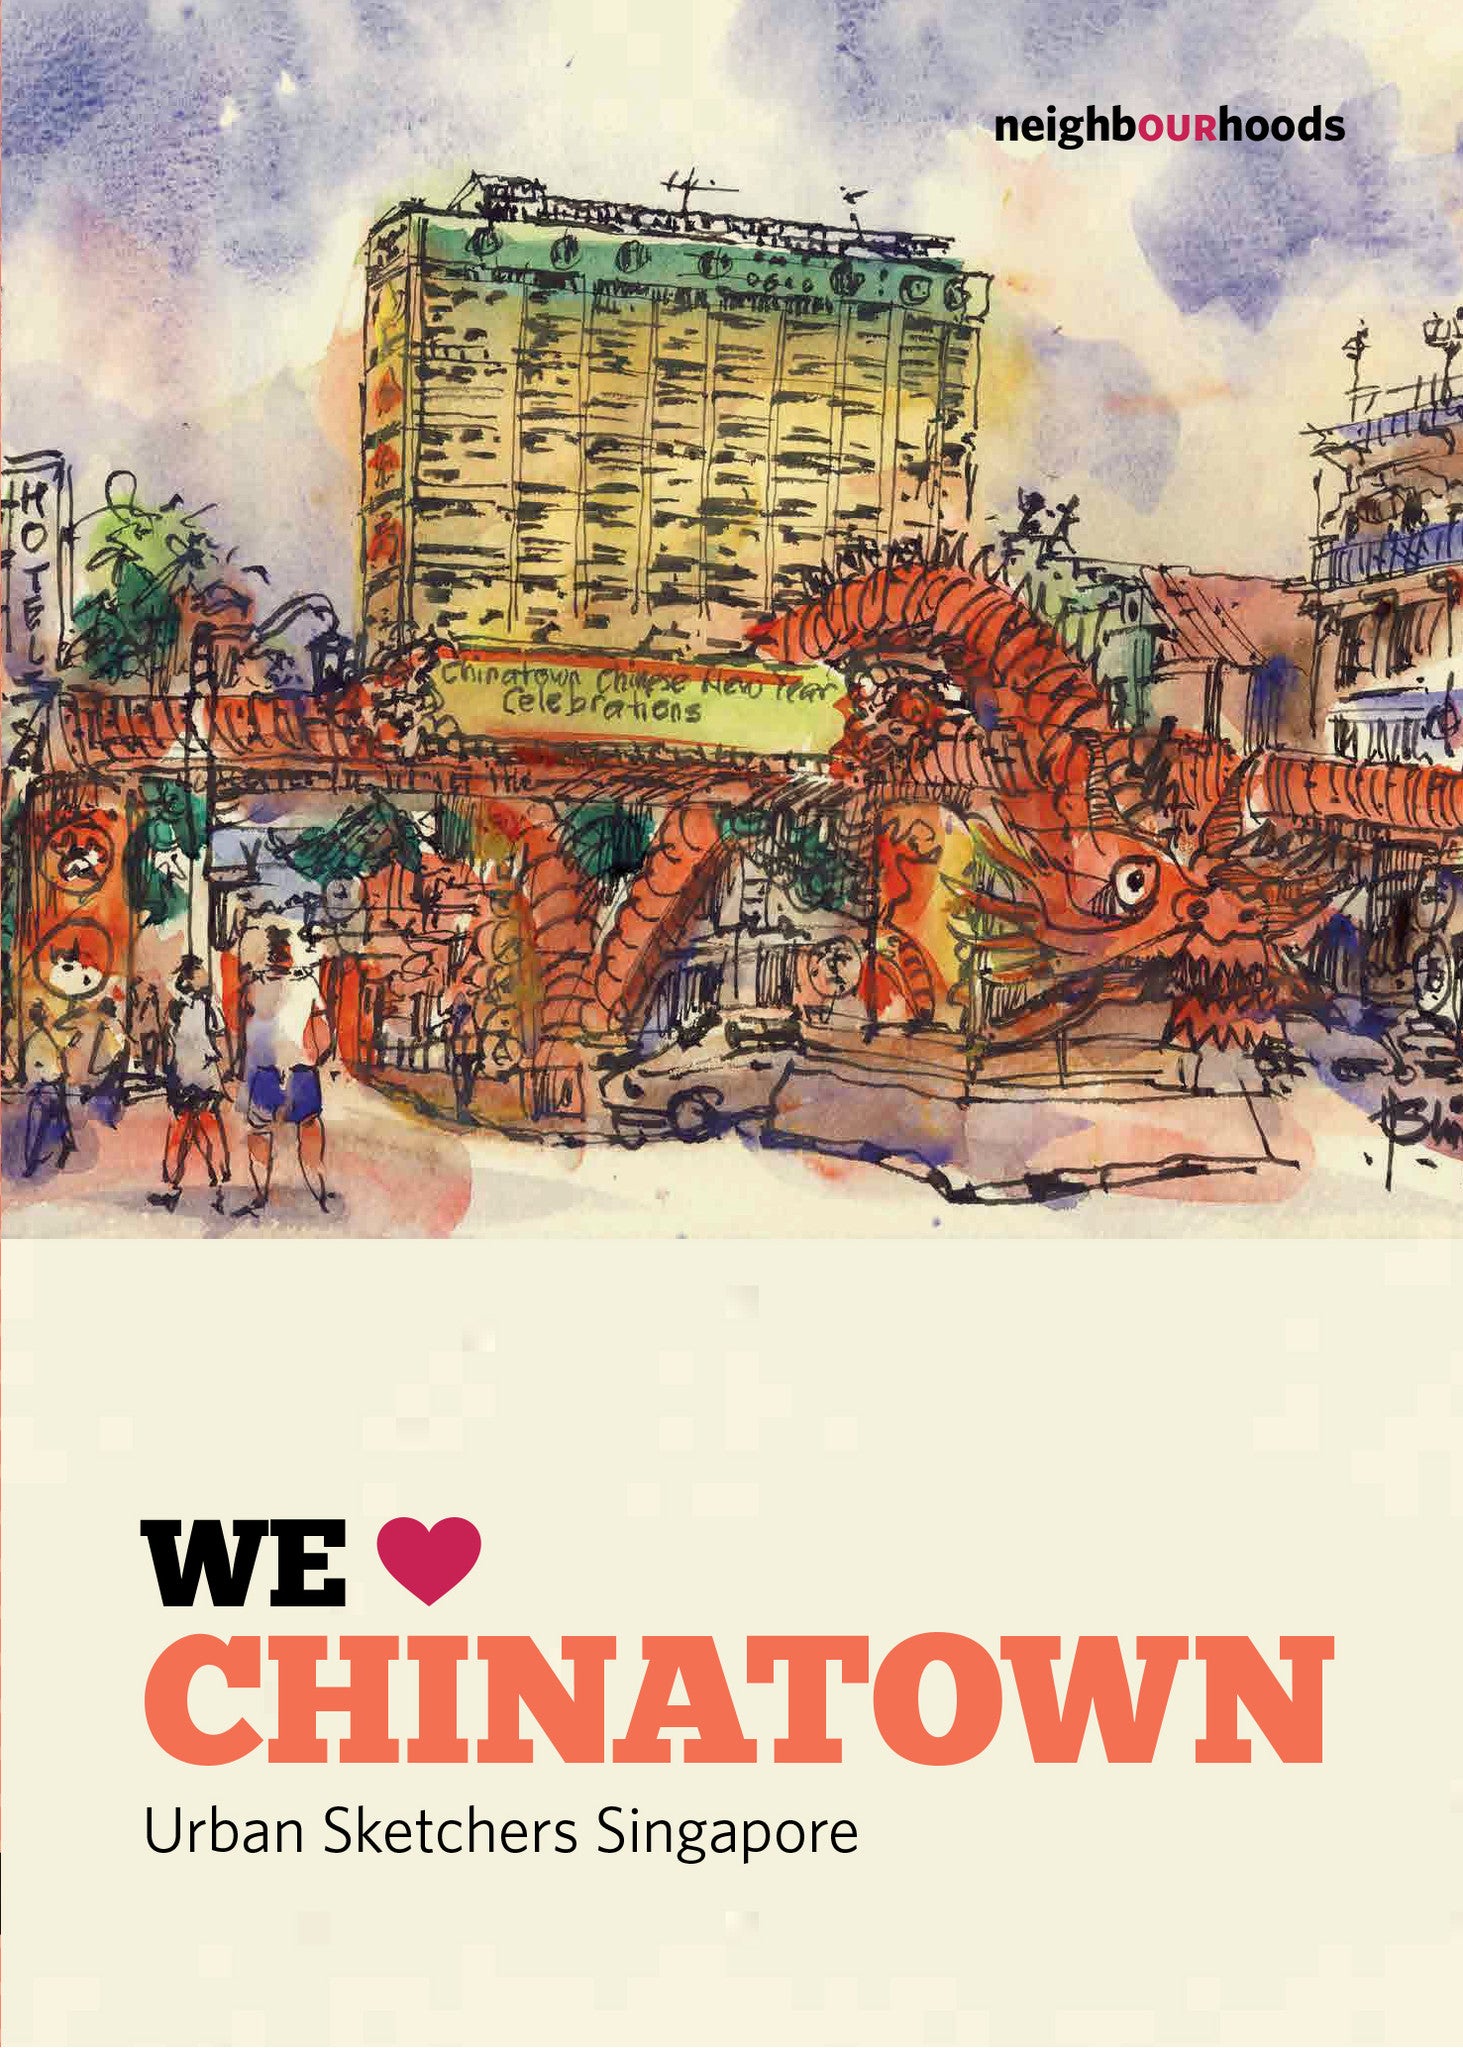 Our Neighbourhoods: We ♥ Chinatown